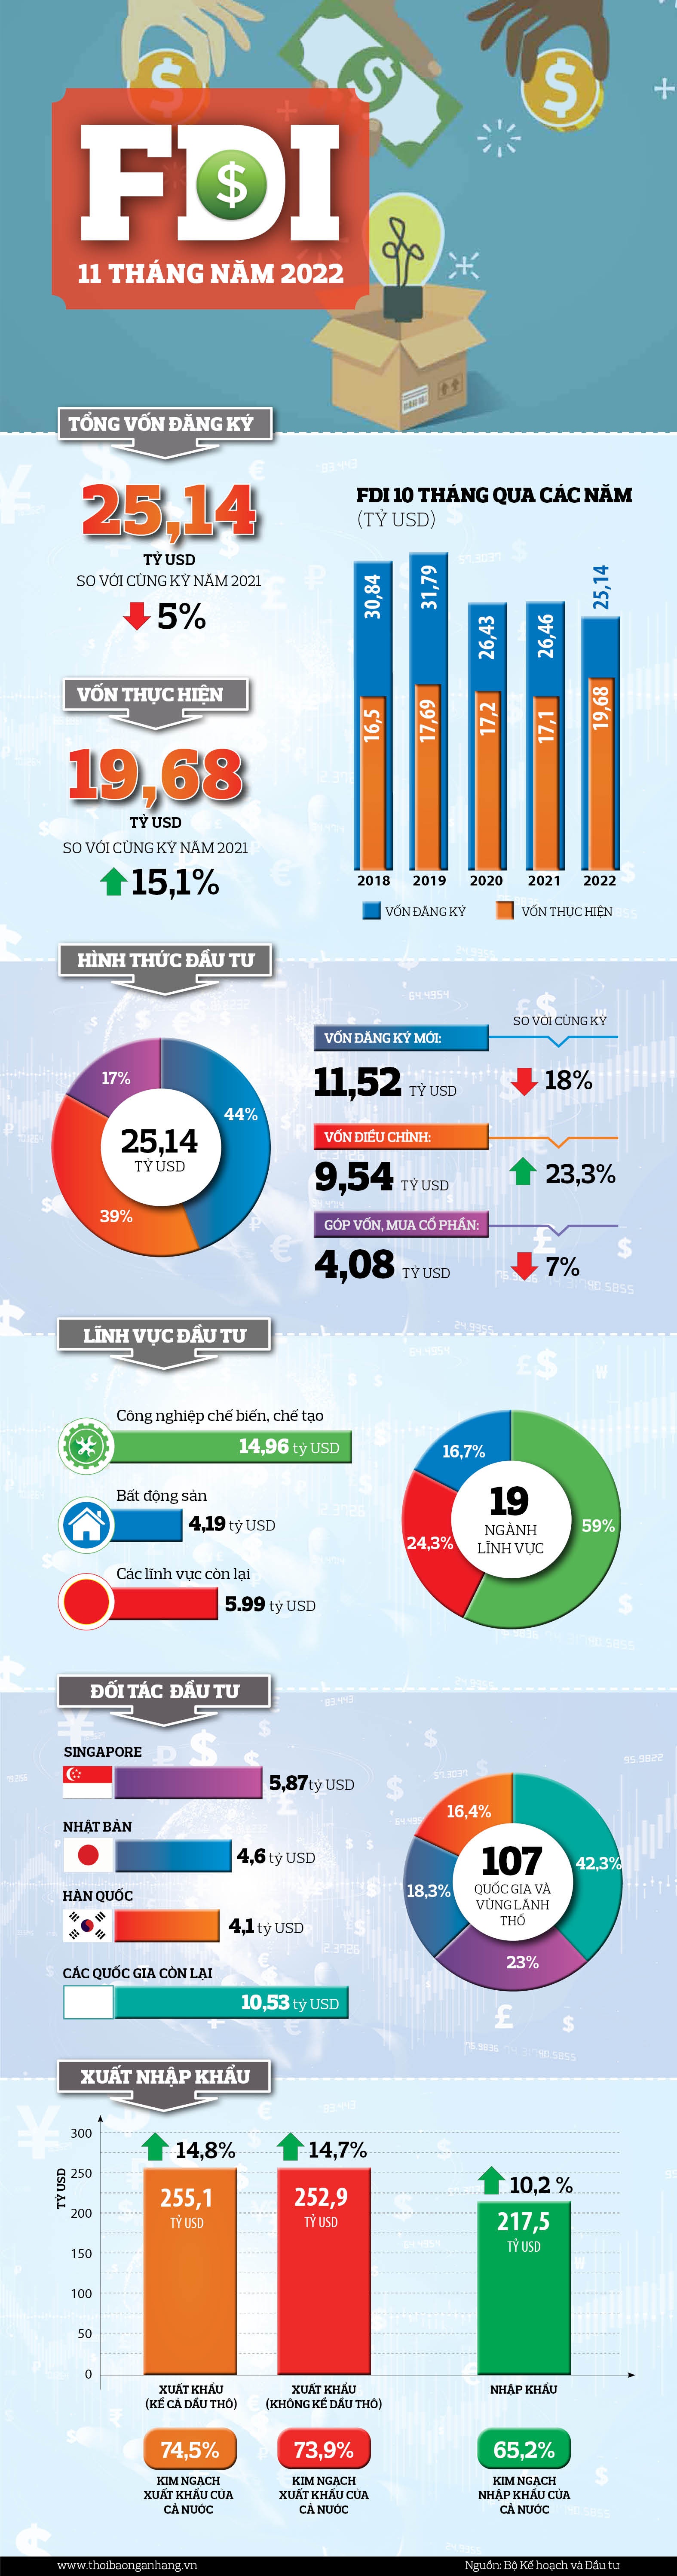 infographic fdi 11 thang nam 2022